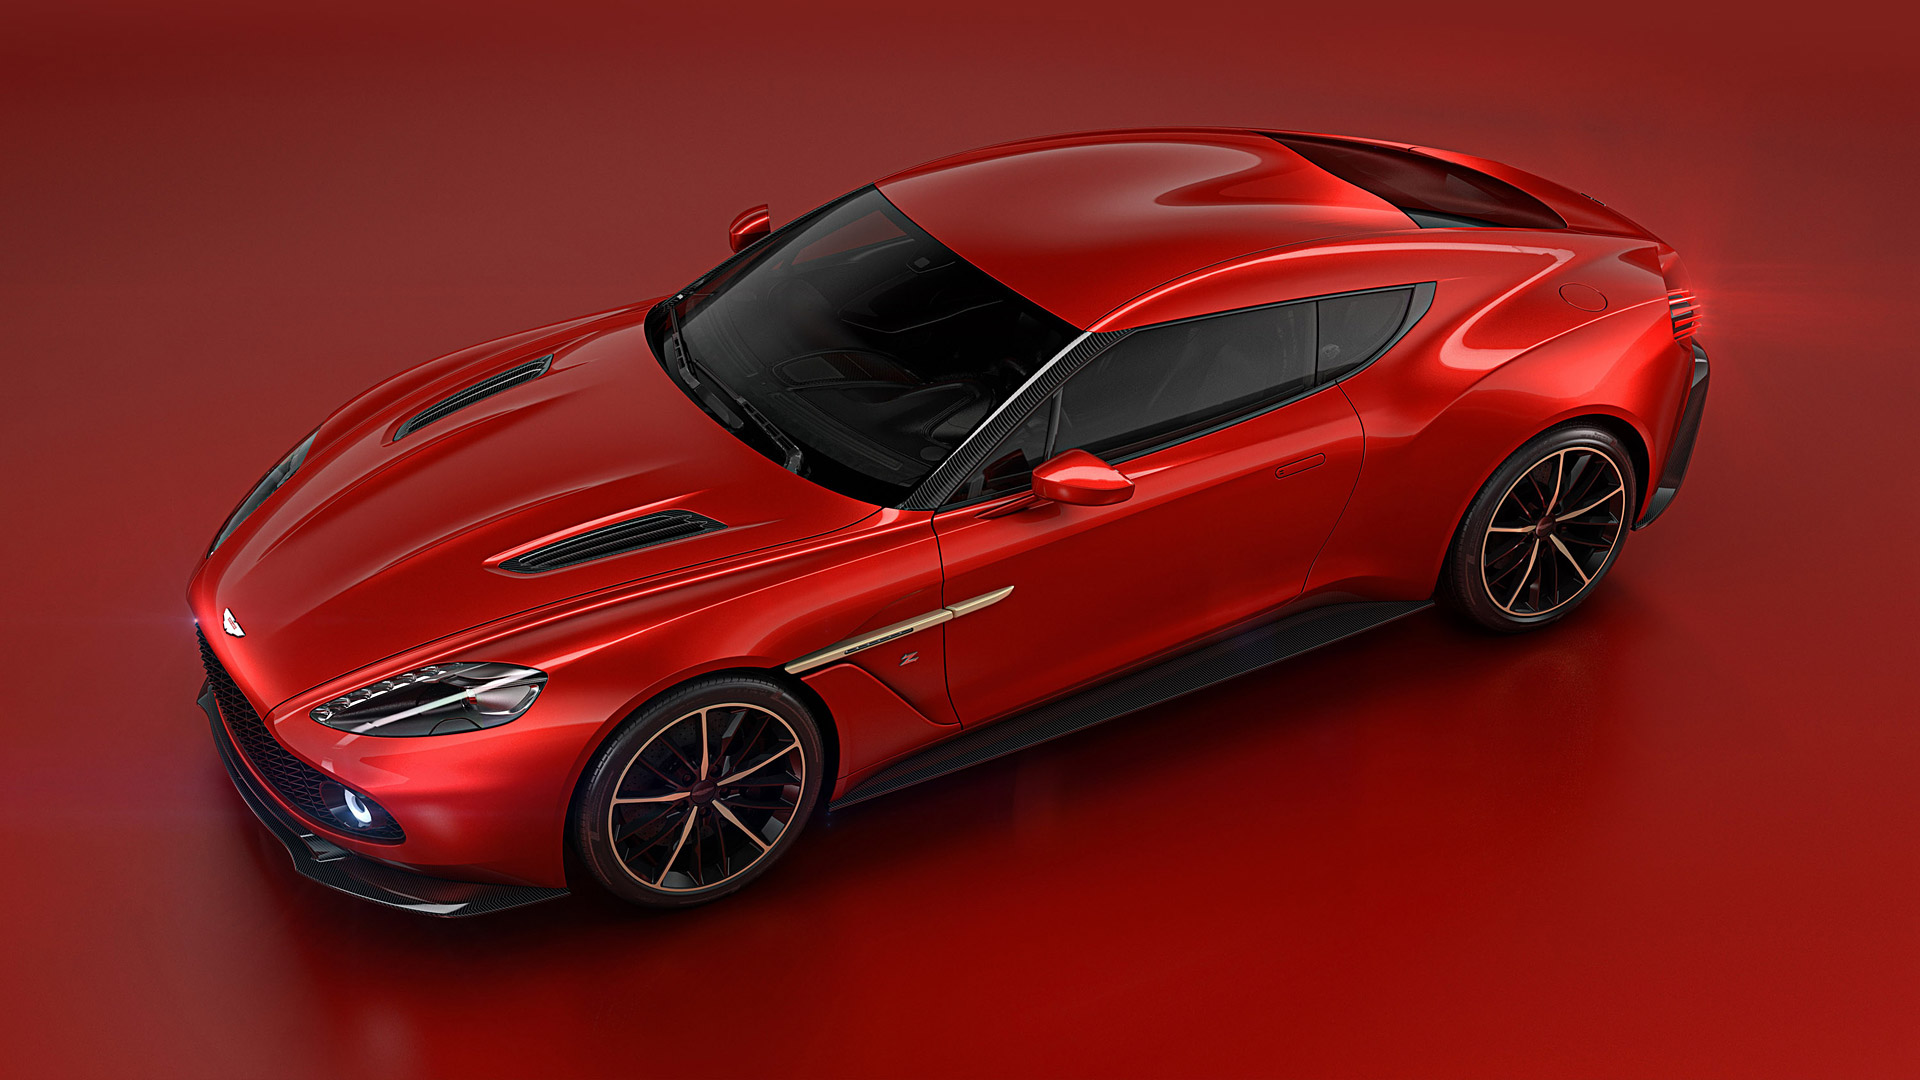  2016 Aston Martin Vanquish Zagato Concept= Wallpaper.